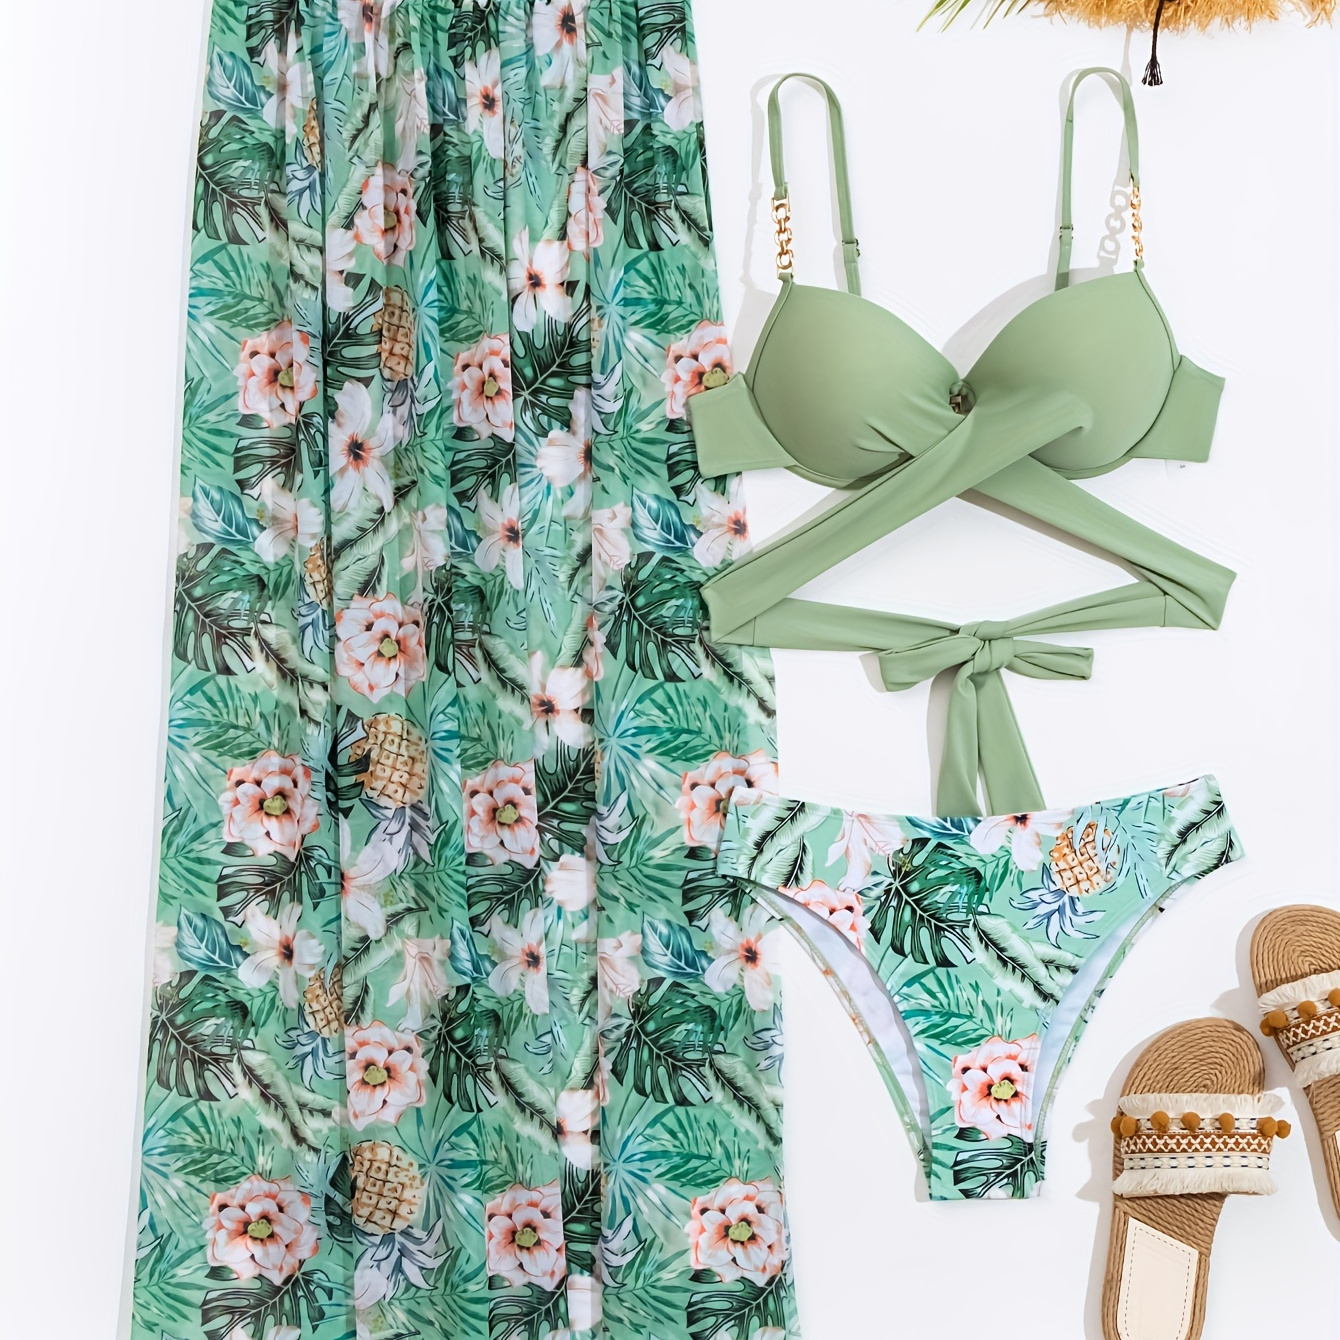 

Tropical Print Stretchy Green 3 Piece Set Swimsuits, Criss Cross Tie Back Push Up Bikini & Split Thigh Cover Up, Women's Swimwear & Clothing